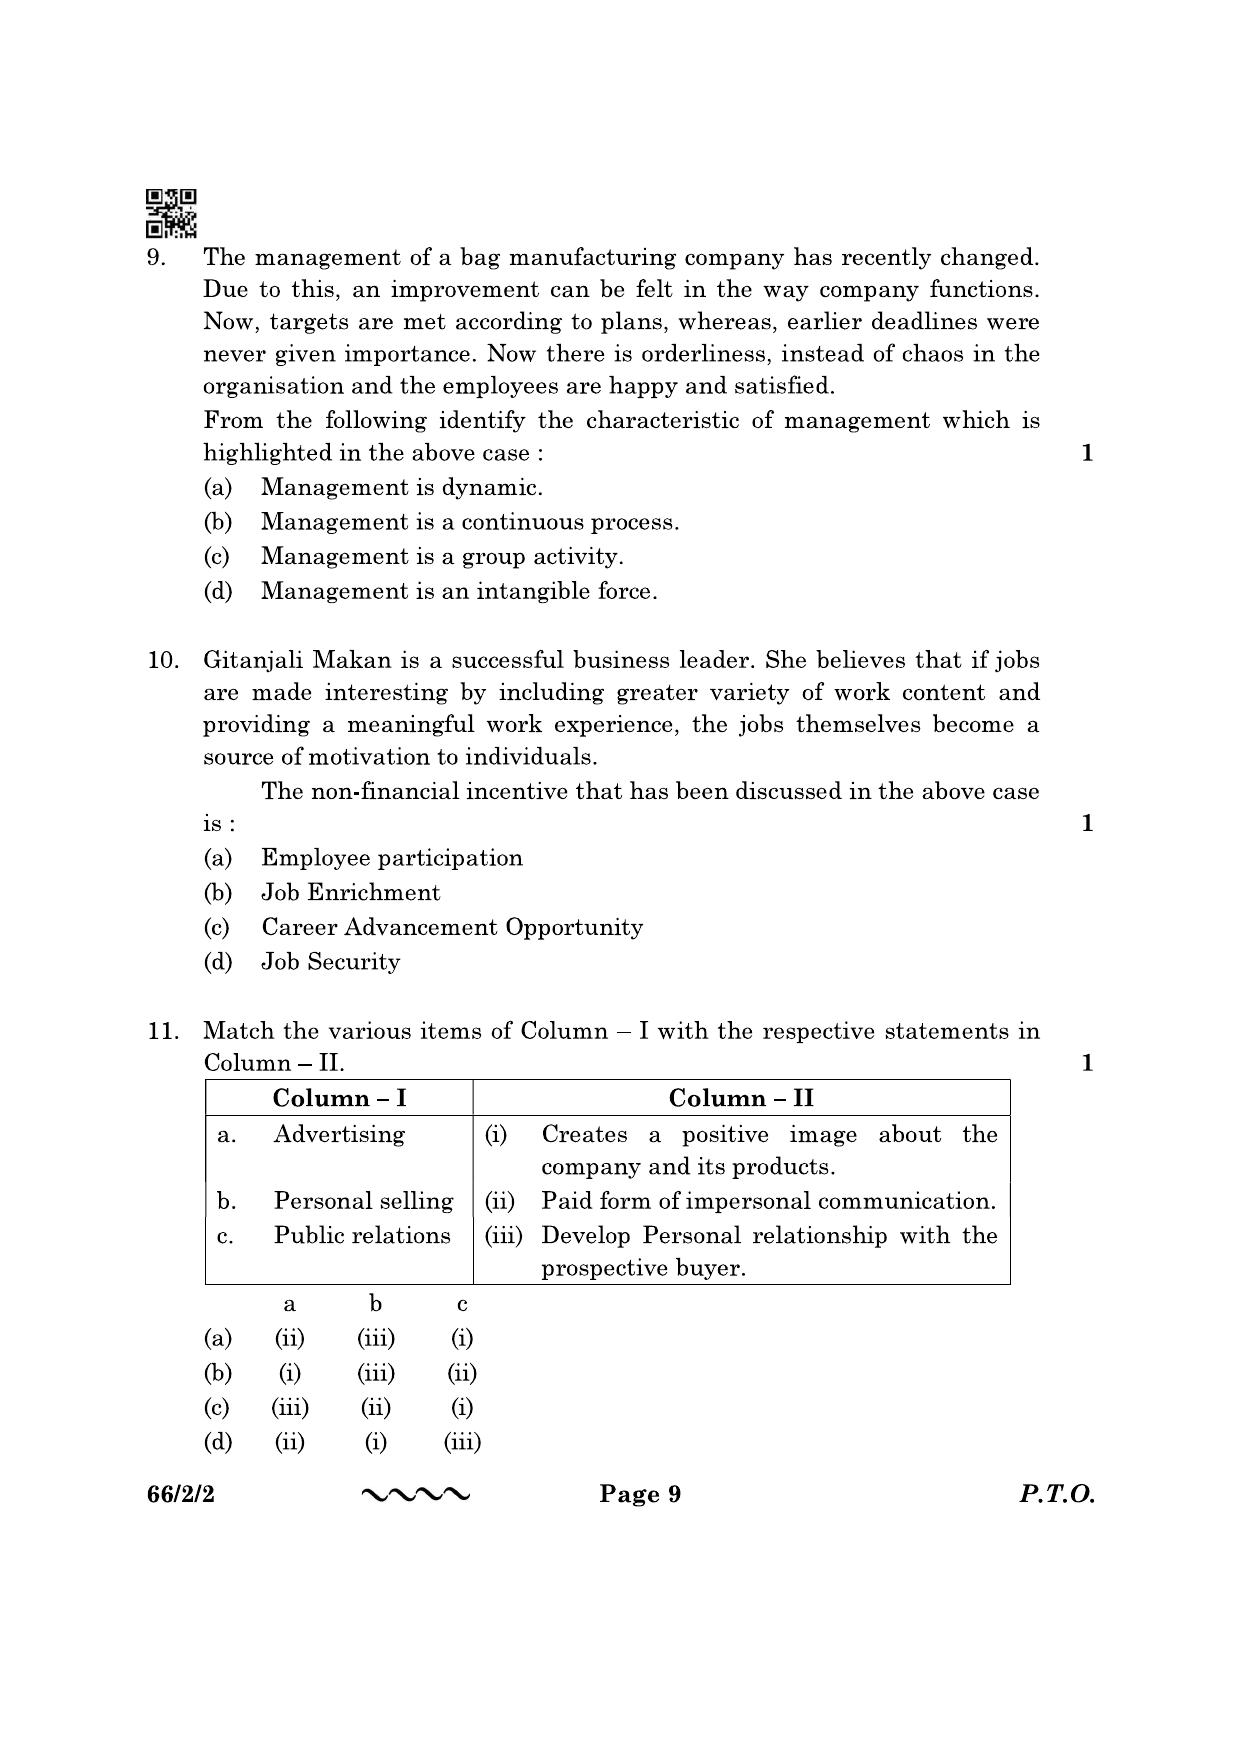 CBSE Class 12 66-2-2 Business Studies 2023 Question Paper - Page 9